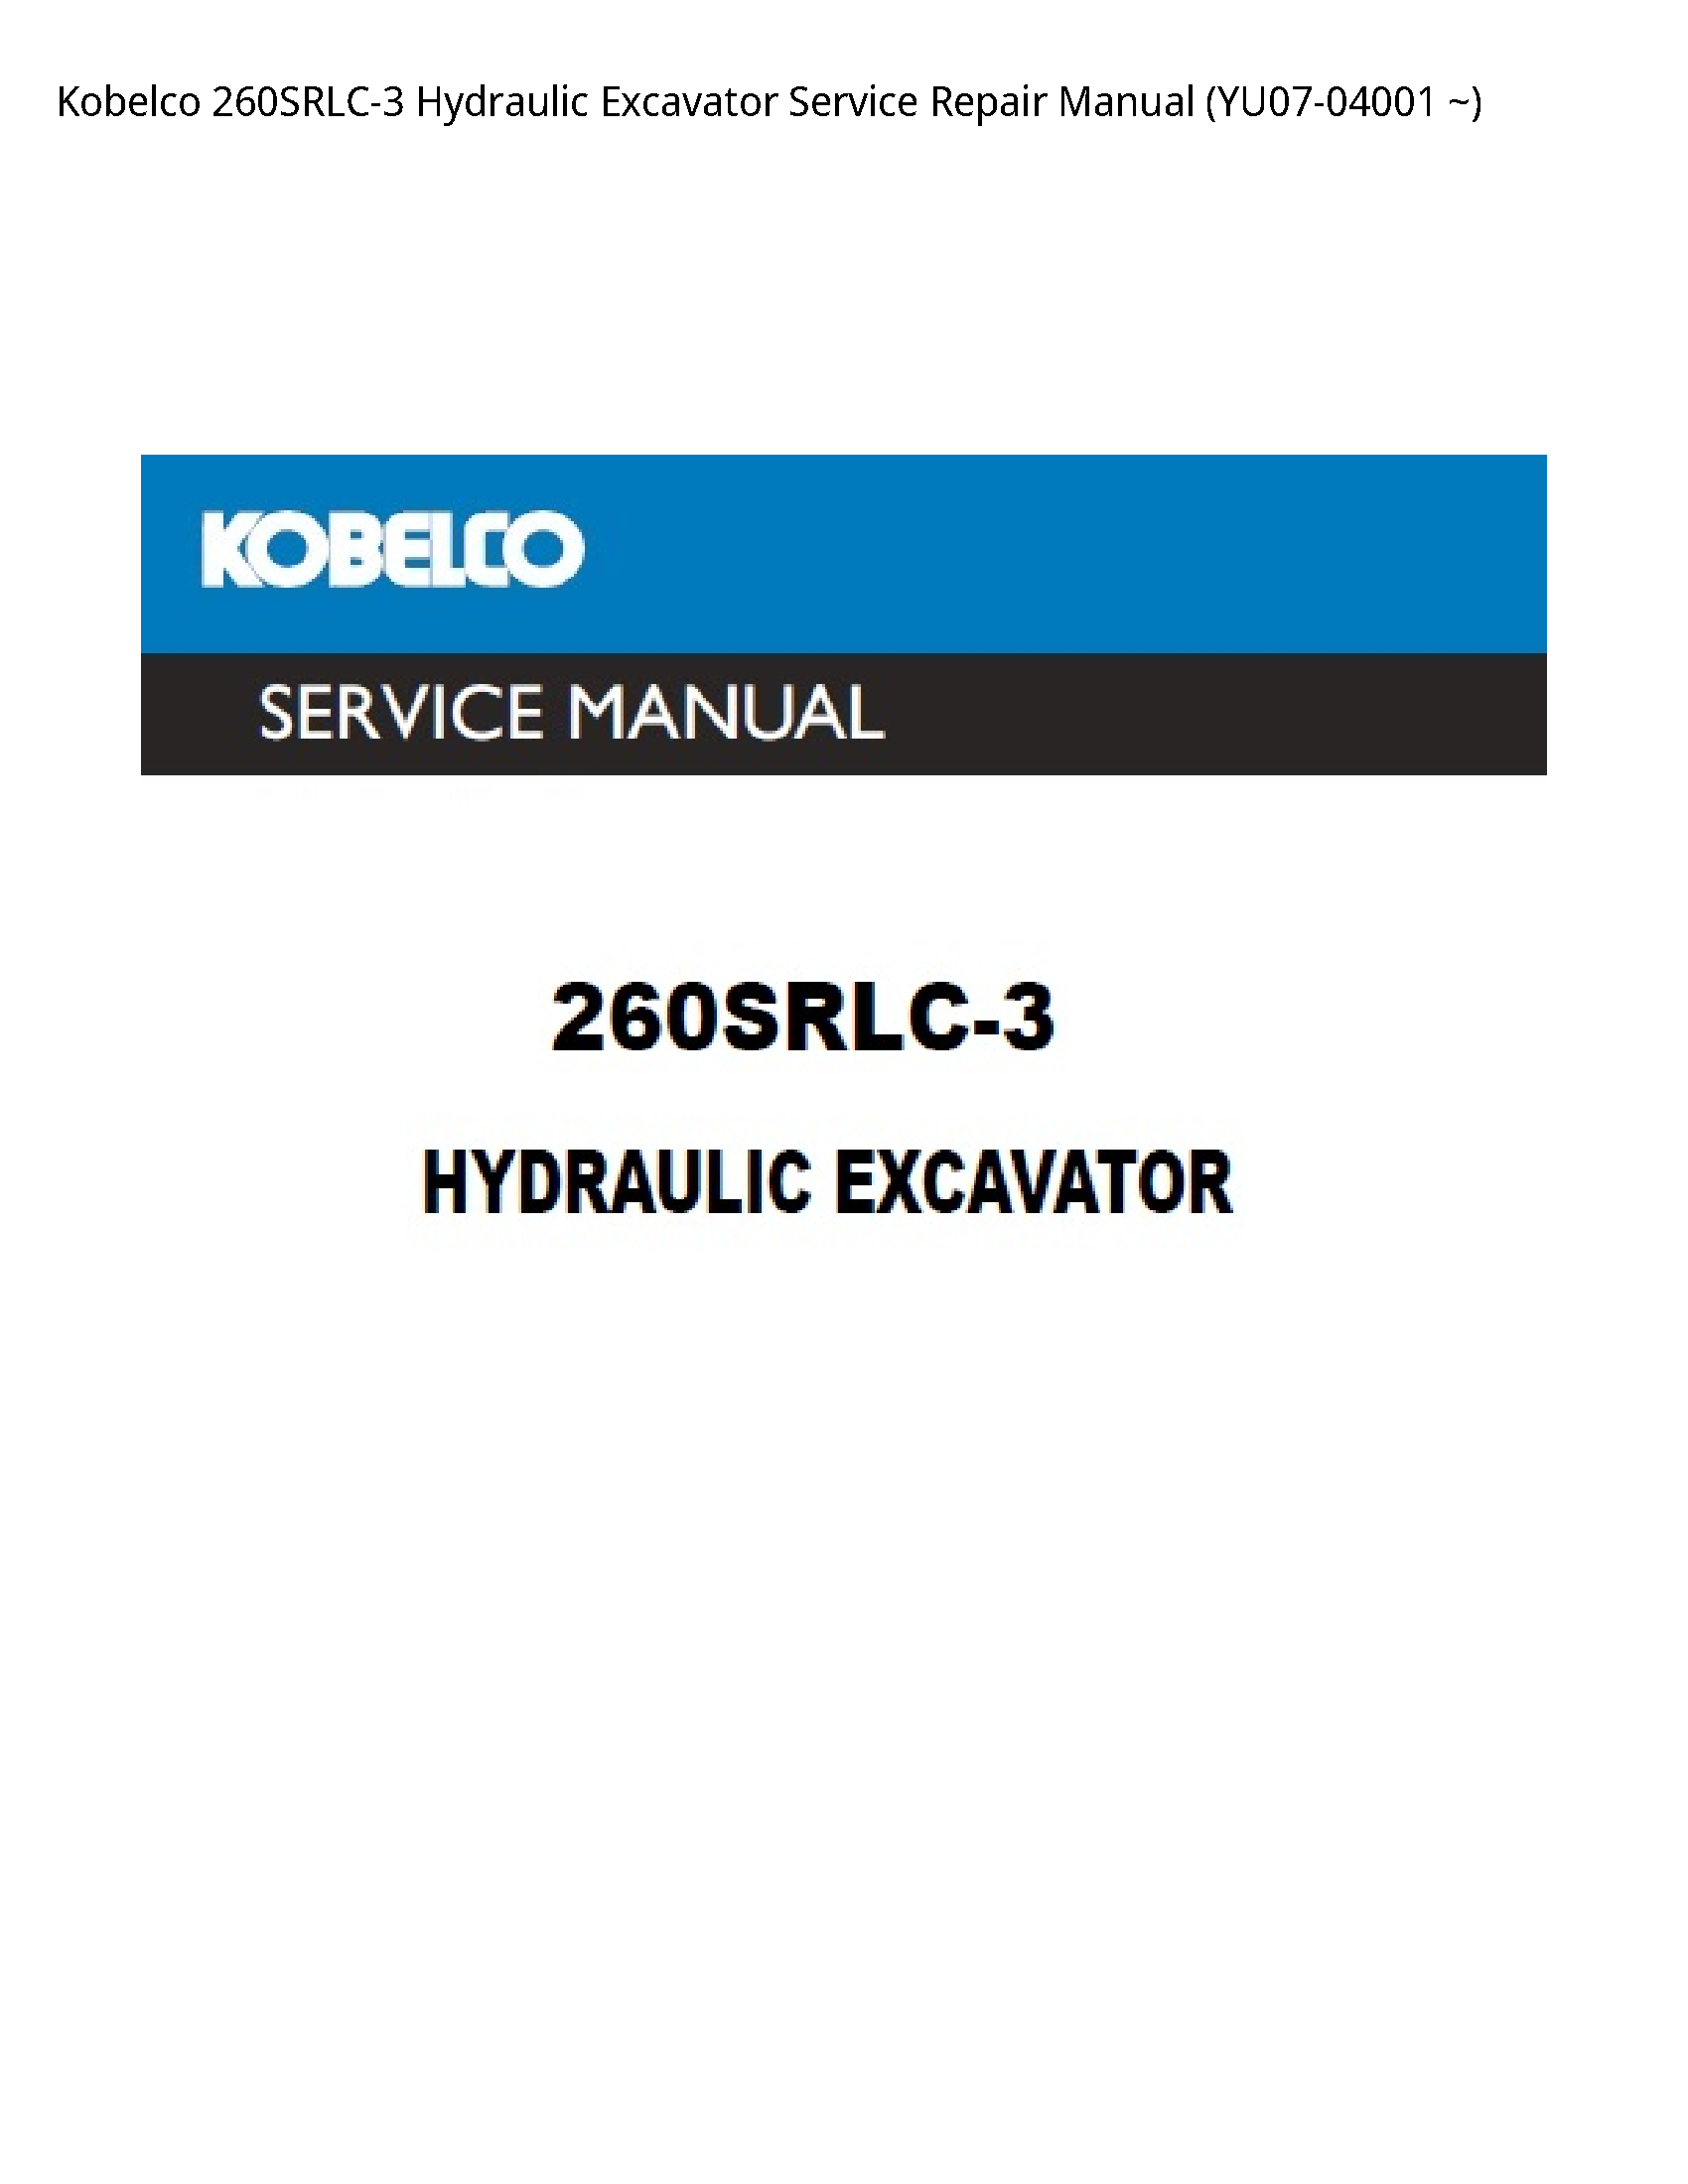 Kobelco 260SRLC-3 Hydraulic Excavator manual